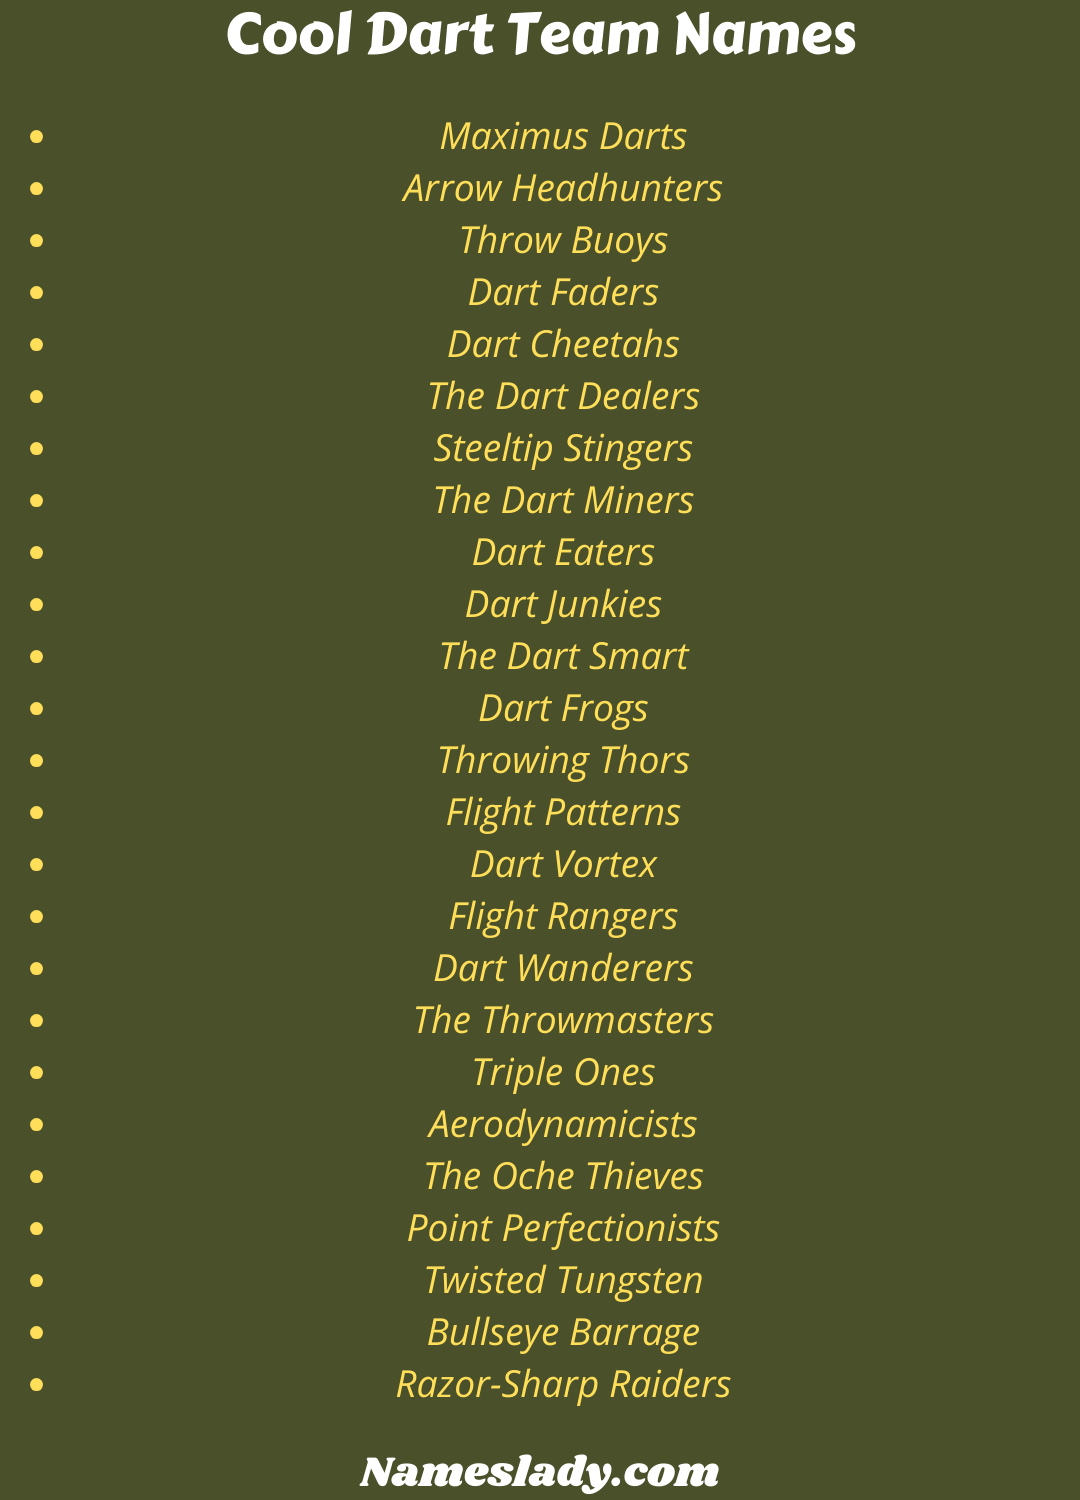 Dart Team Names